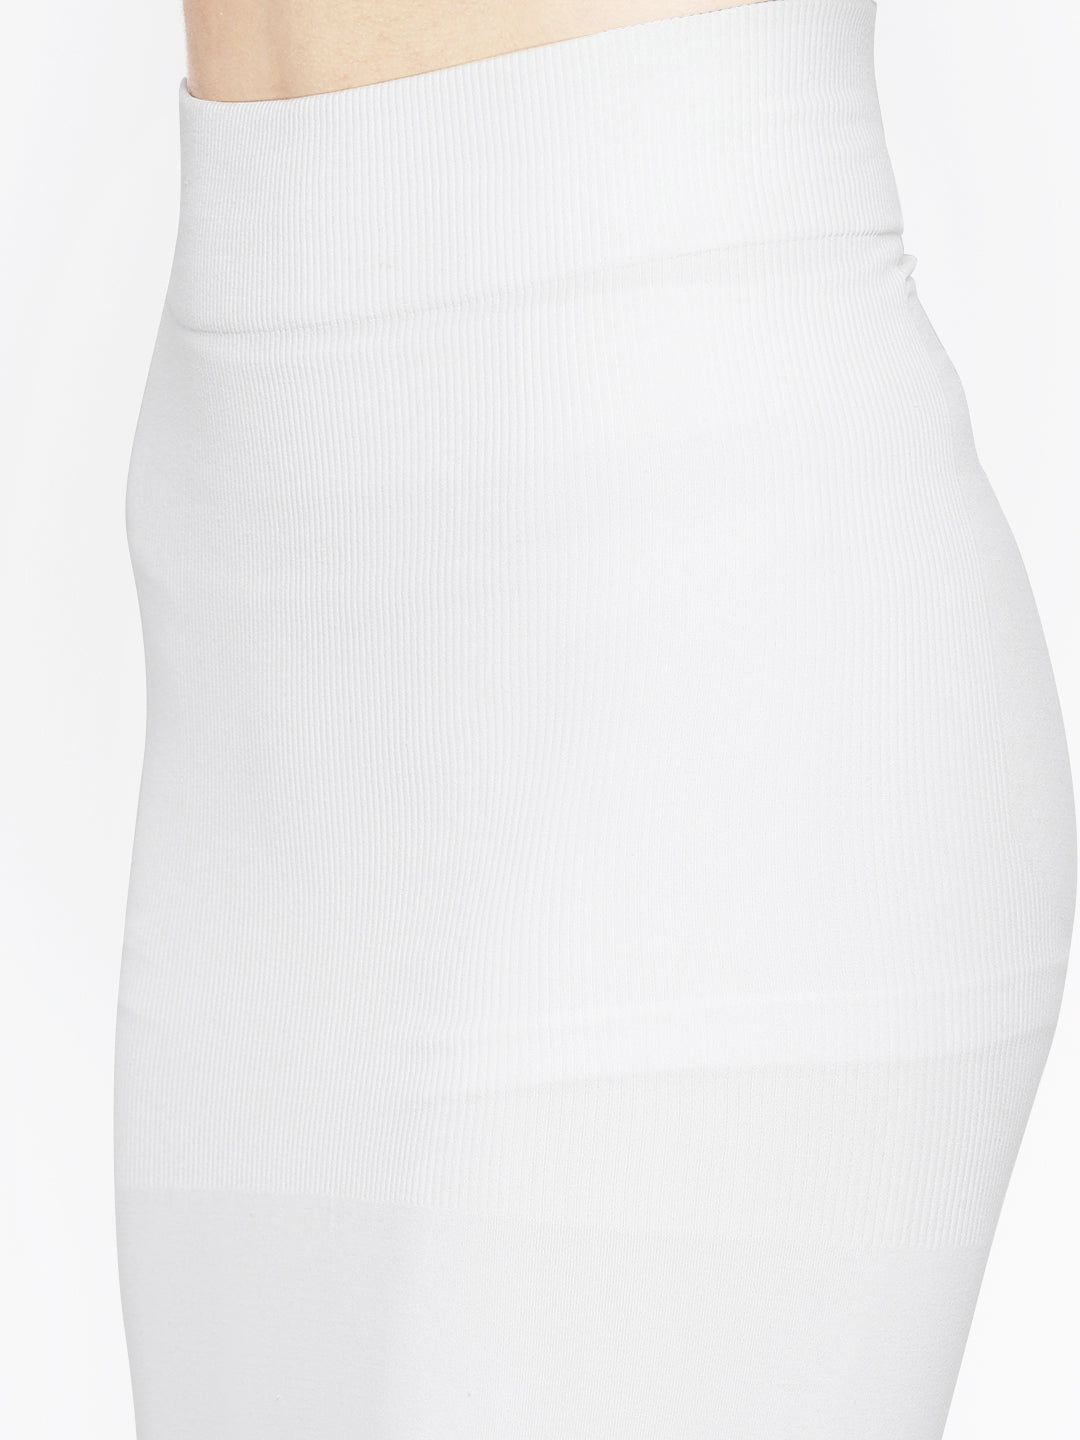 Adorna Saree Shapewear - White